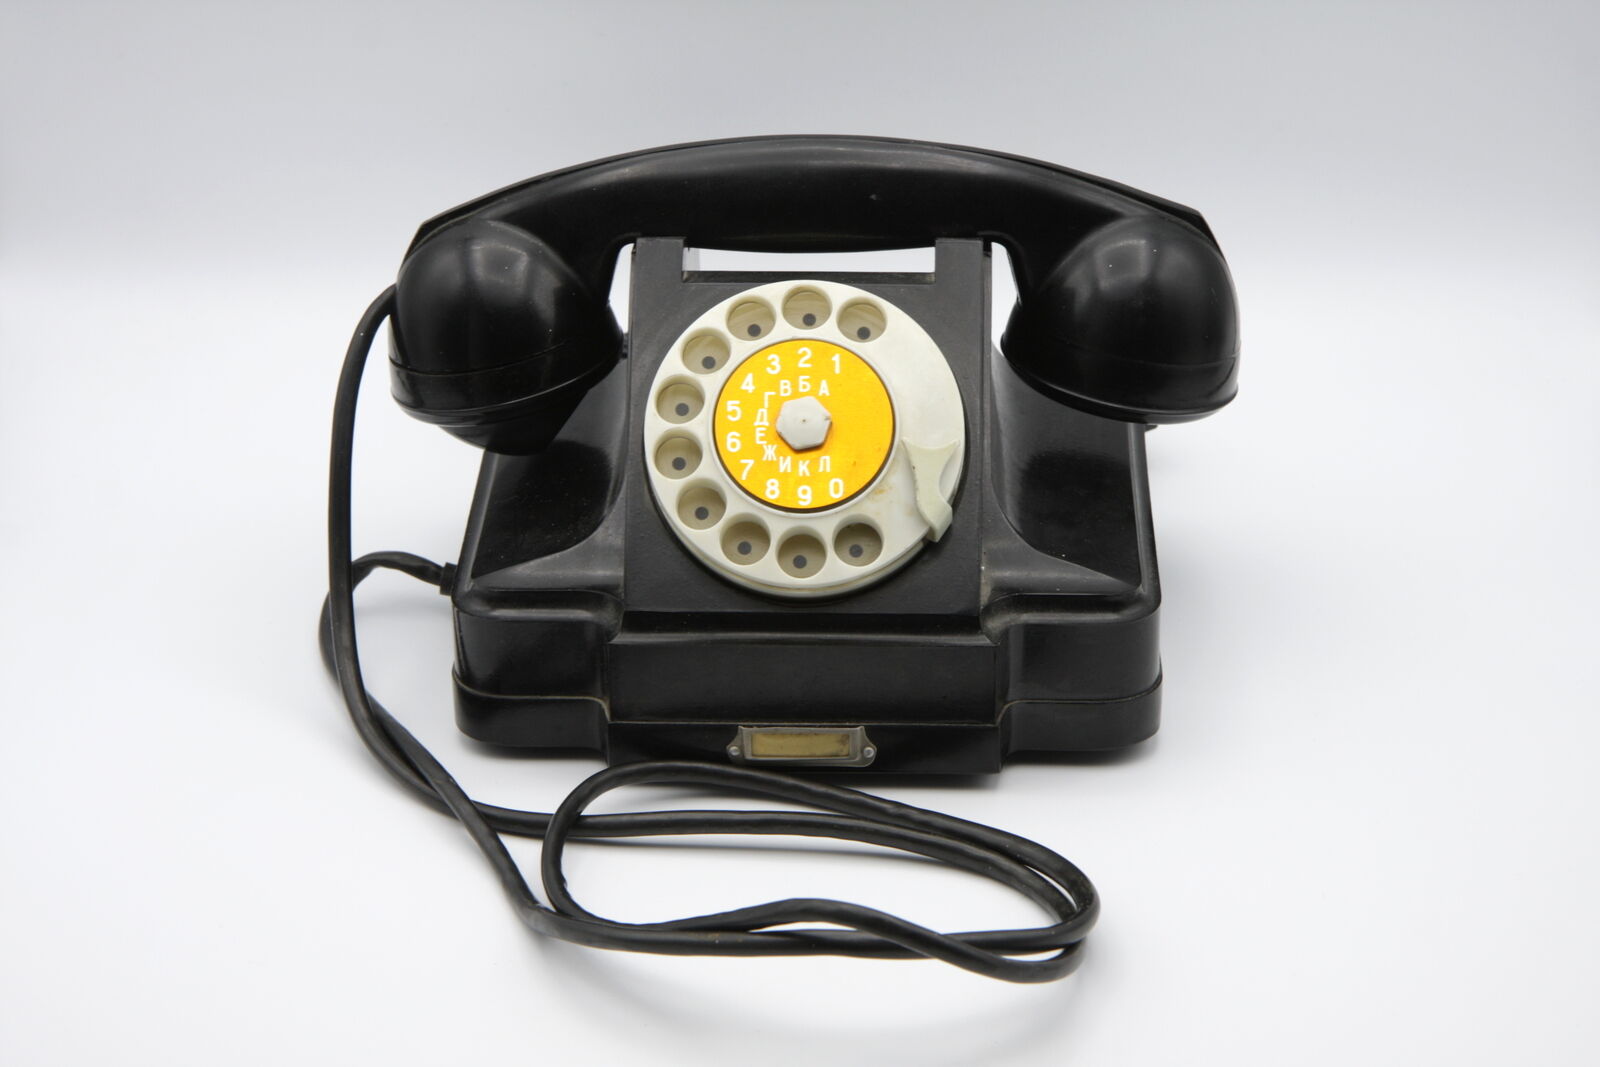 Black Phone Bakelite Rotary White Dialing Vintage Desk Telephone Krasnaya Zarya